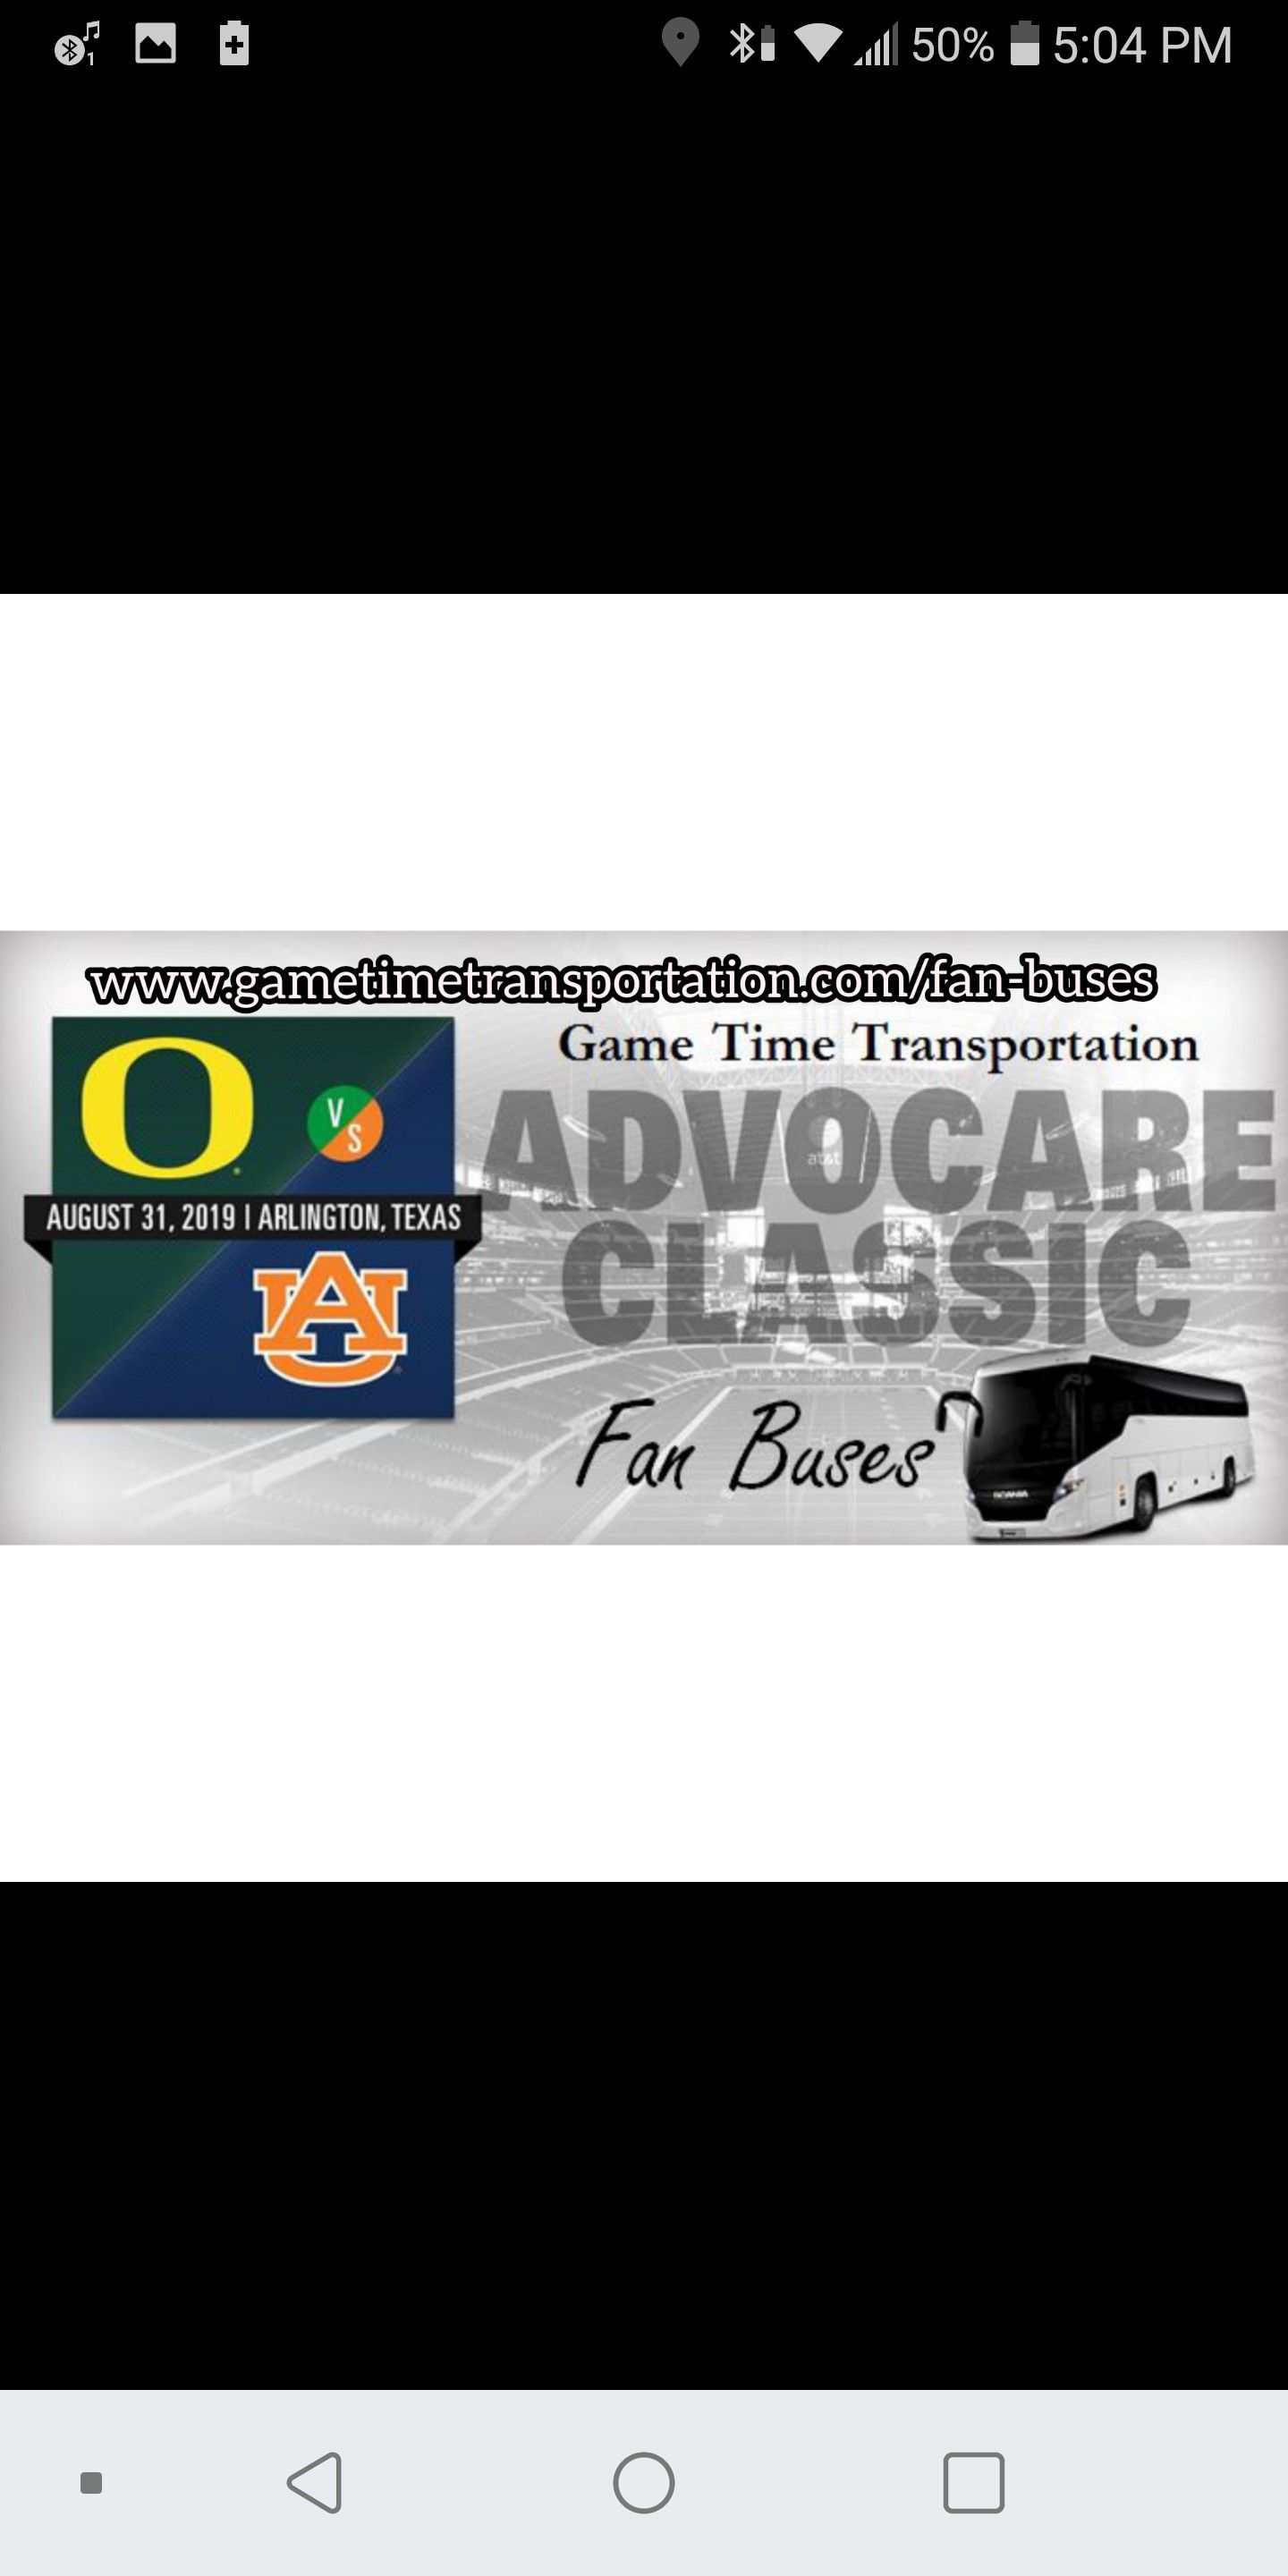 Advocare Classic Transportation - Fan Bus